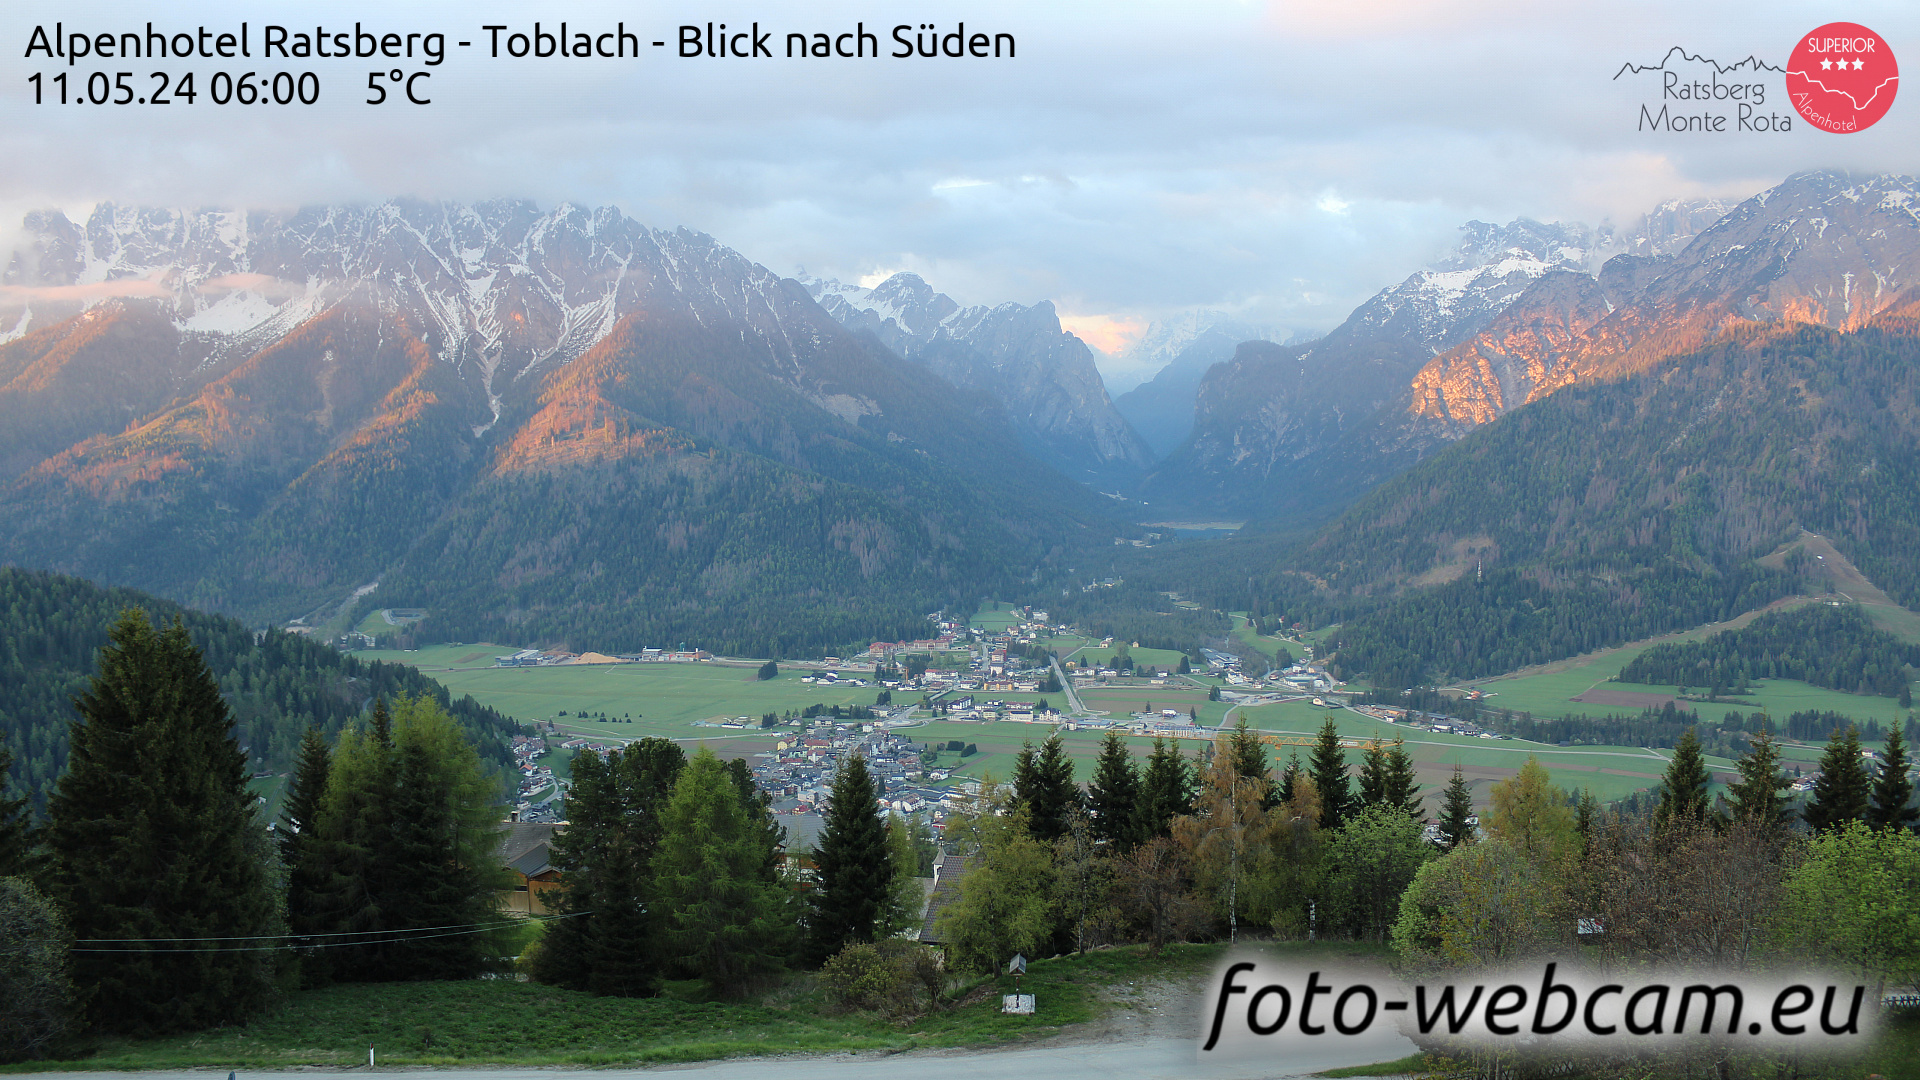 Toblach (Dolomites) Thu. 06:03